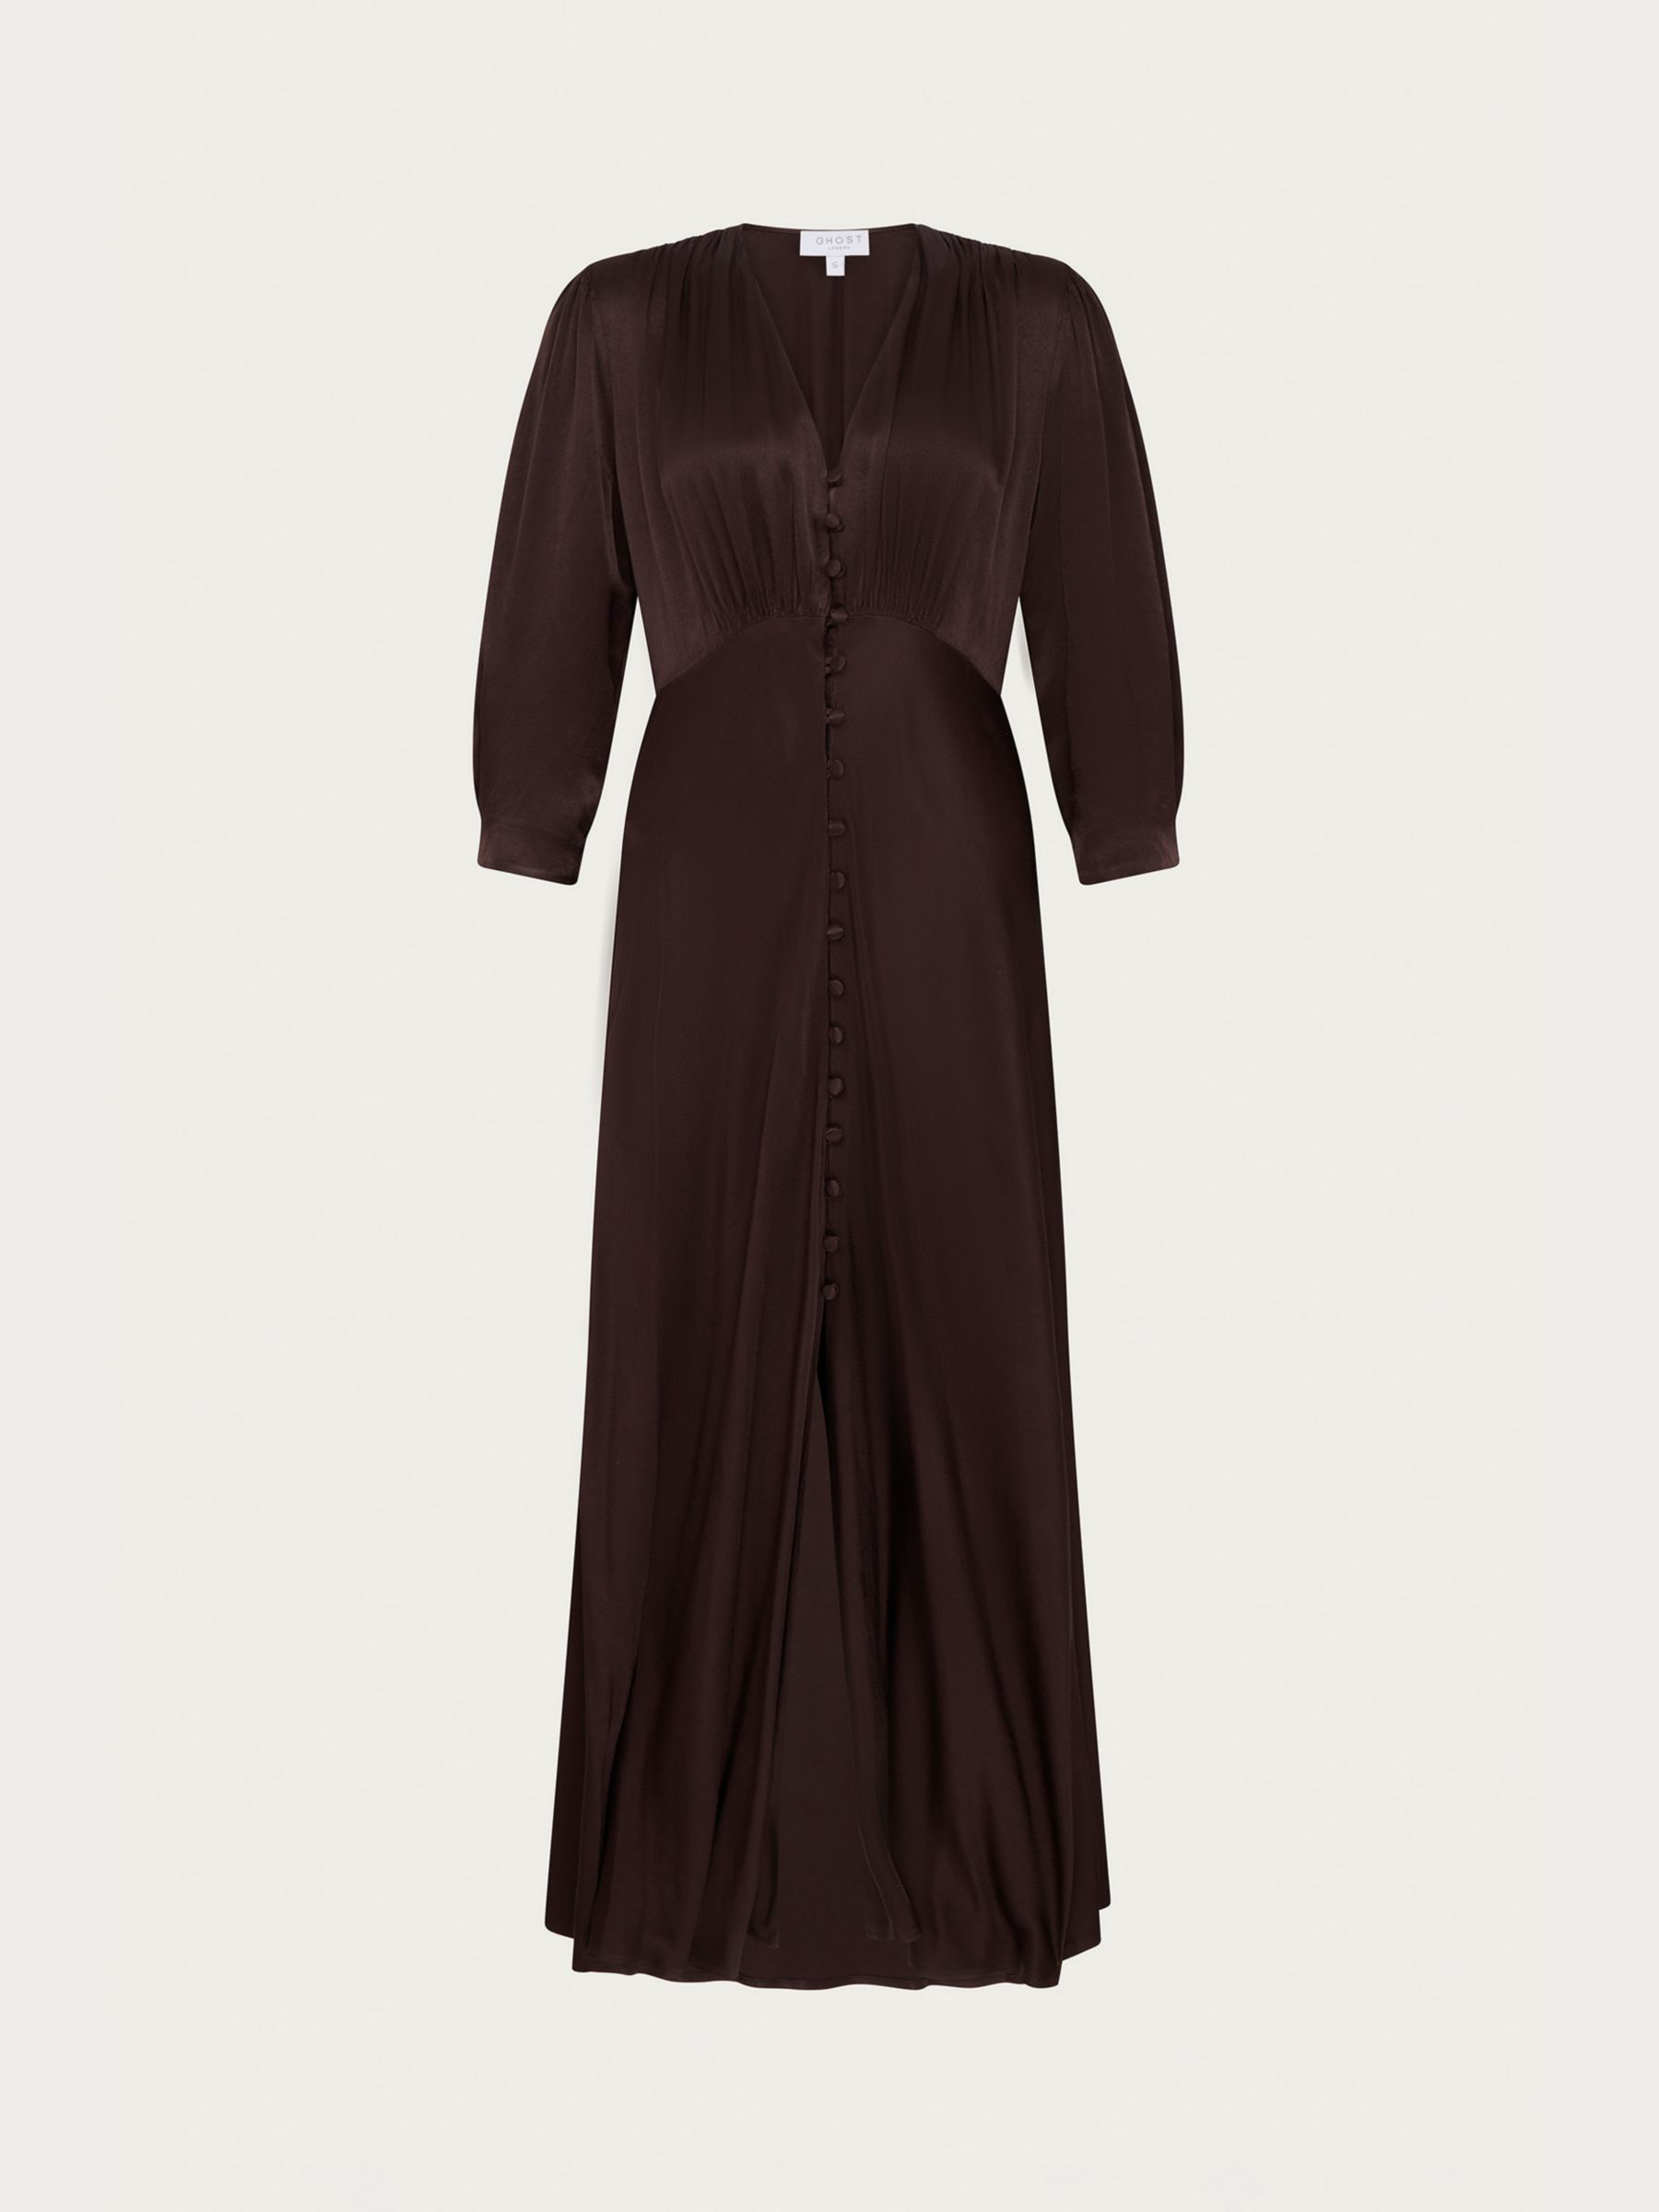 Ghost Madison Satin Midi Dress, Dark Chocolate at John Lewis & Partners